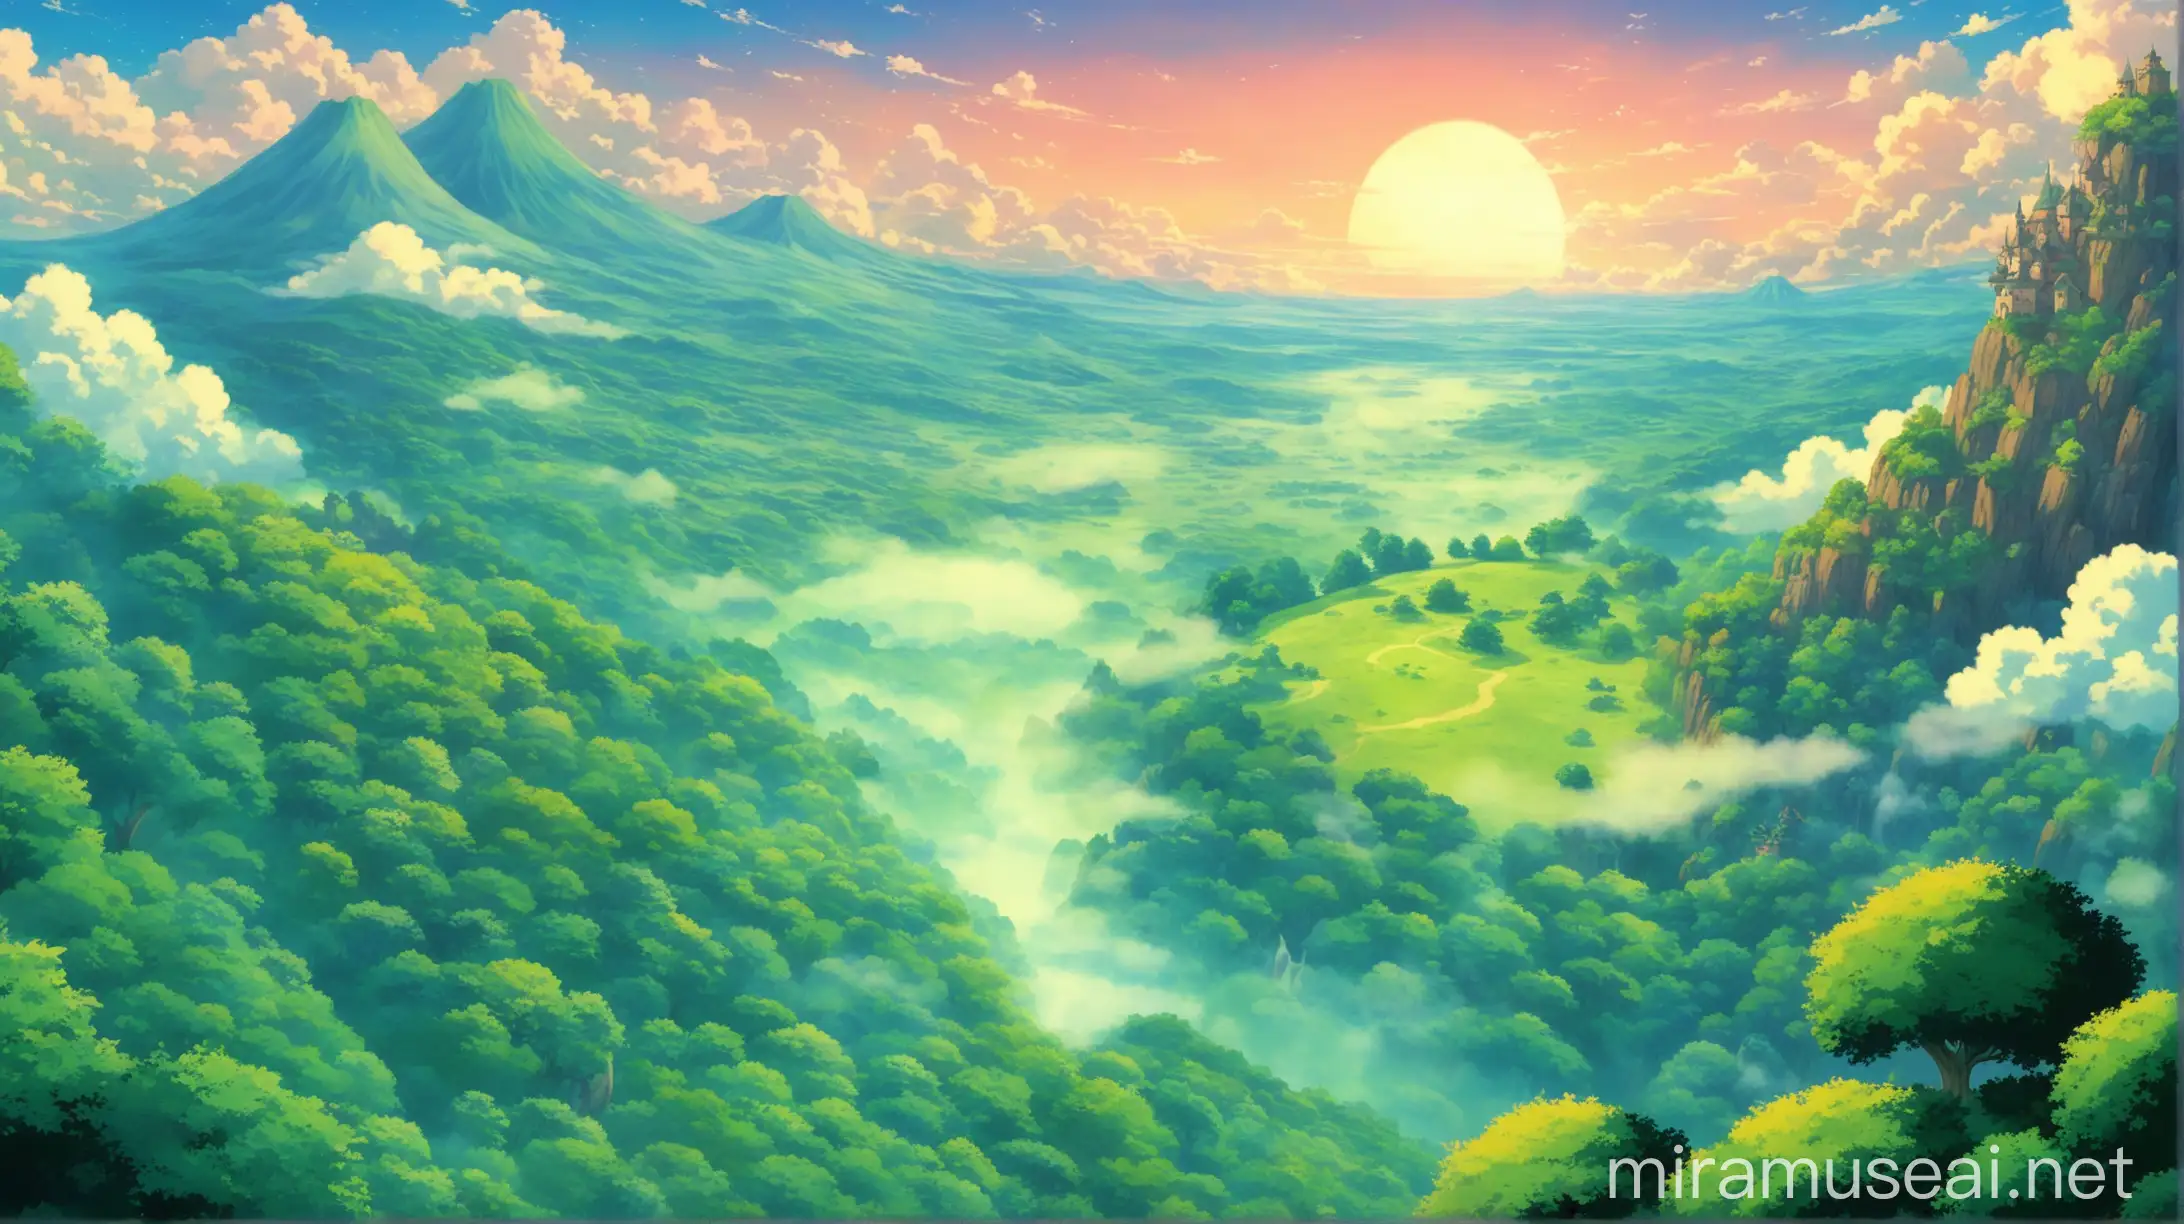 Dreamy GhibliInspired Nature Landscape Wallpaper